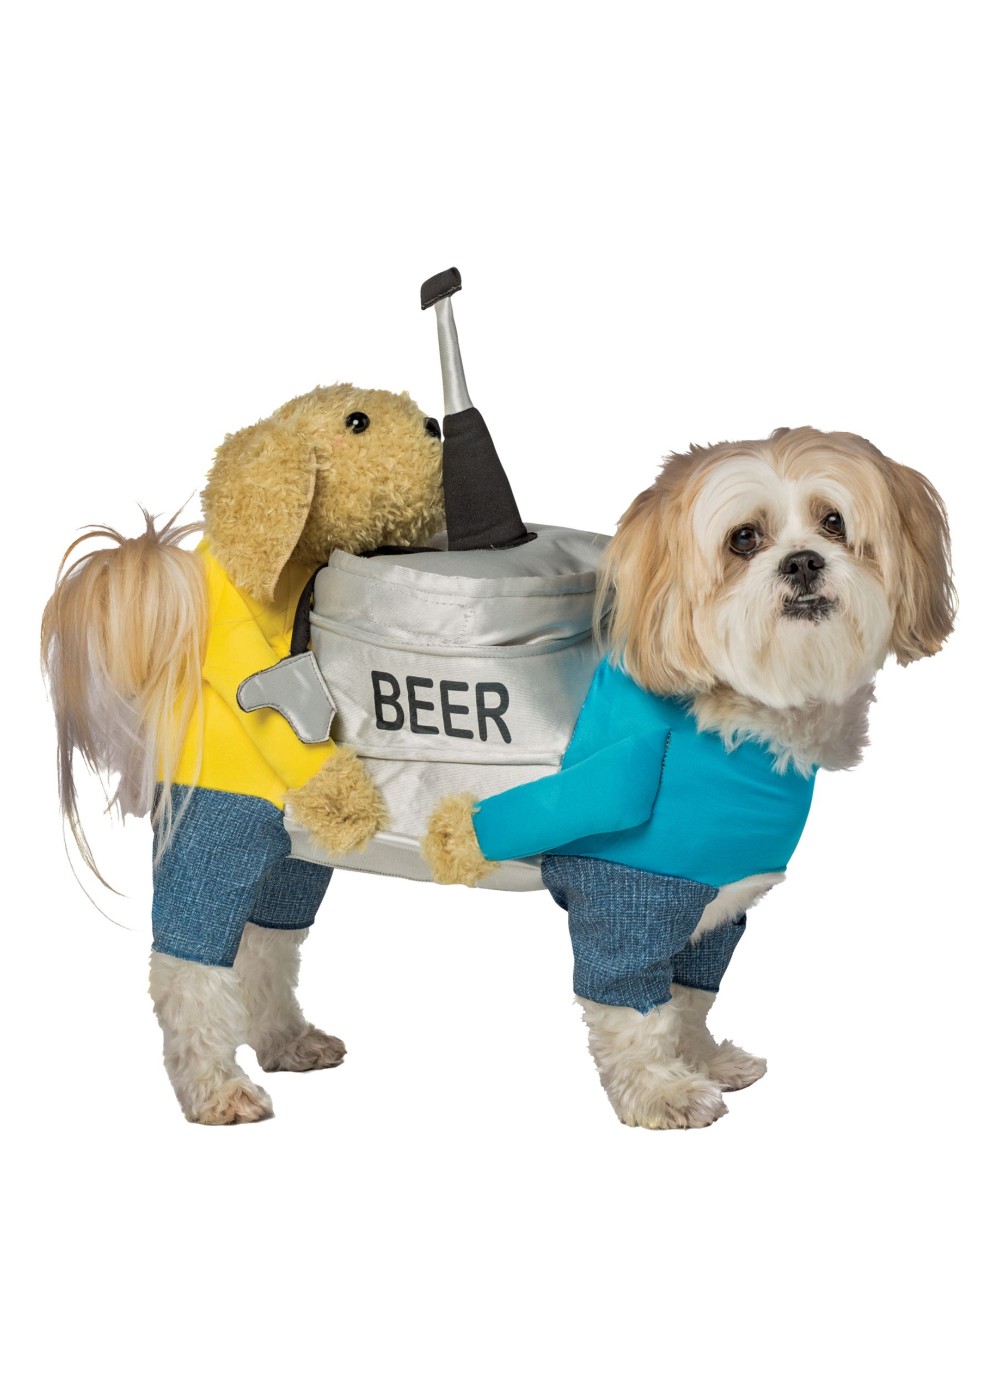 Beer Keg Dog Costume - Animal Costumes